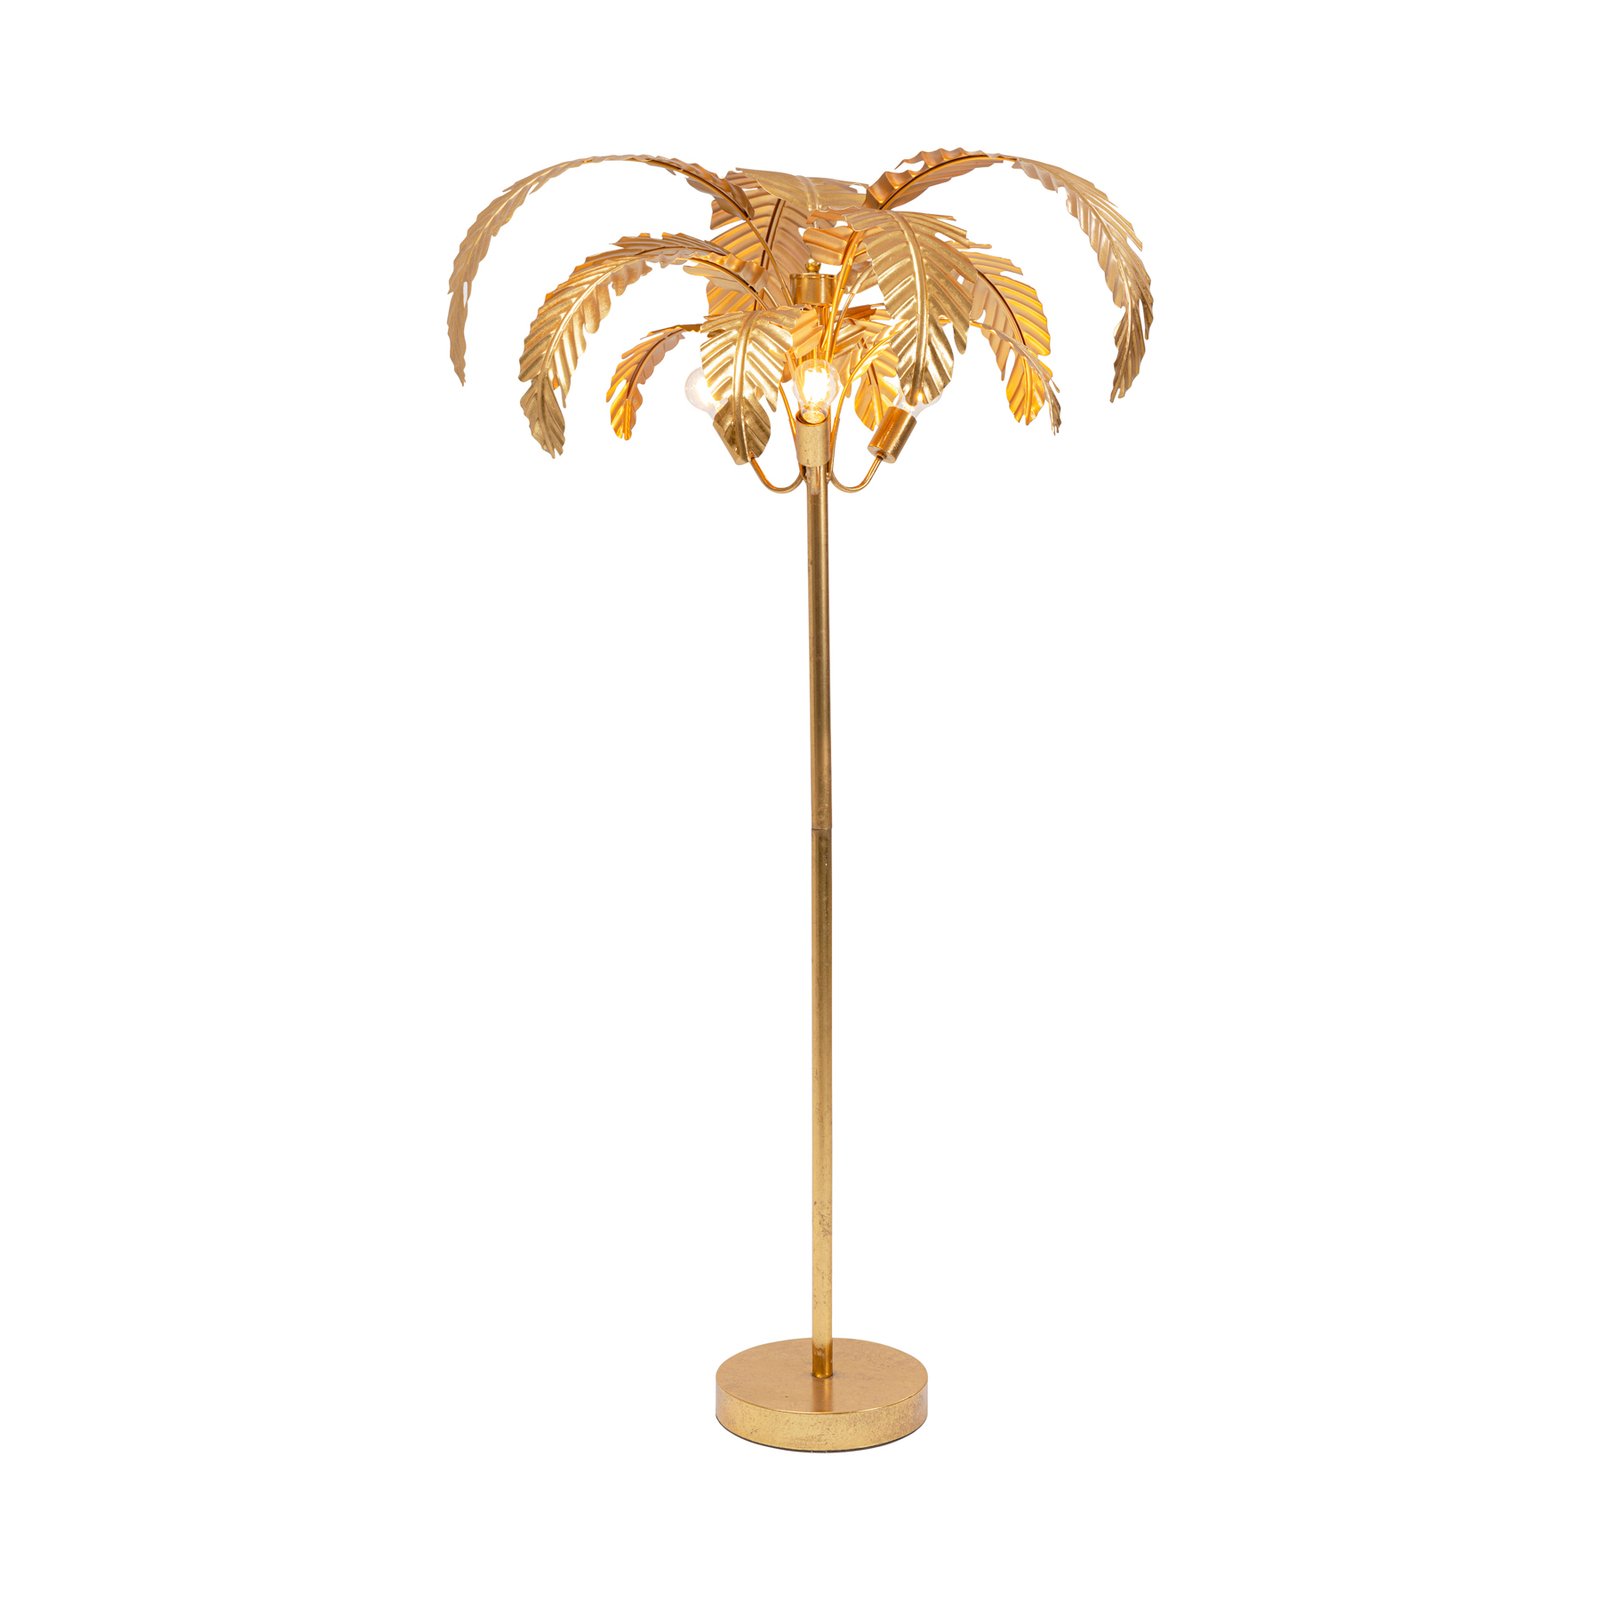 KARE Palmera floor lamp, 170 cm high, brass